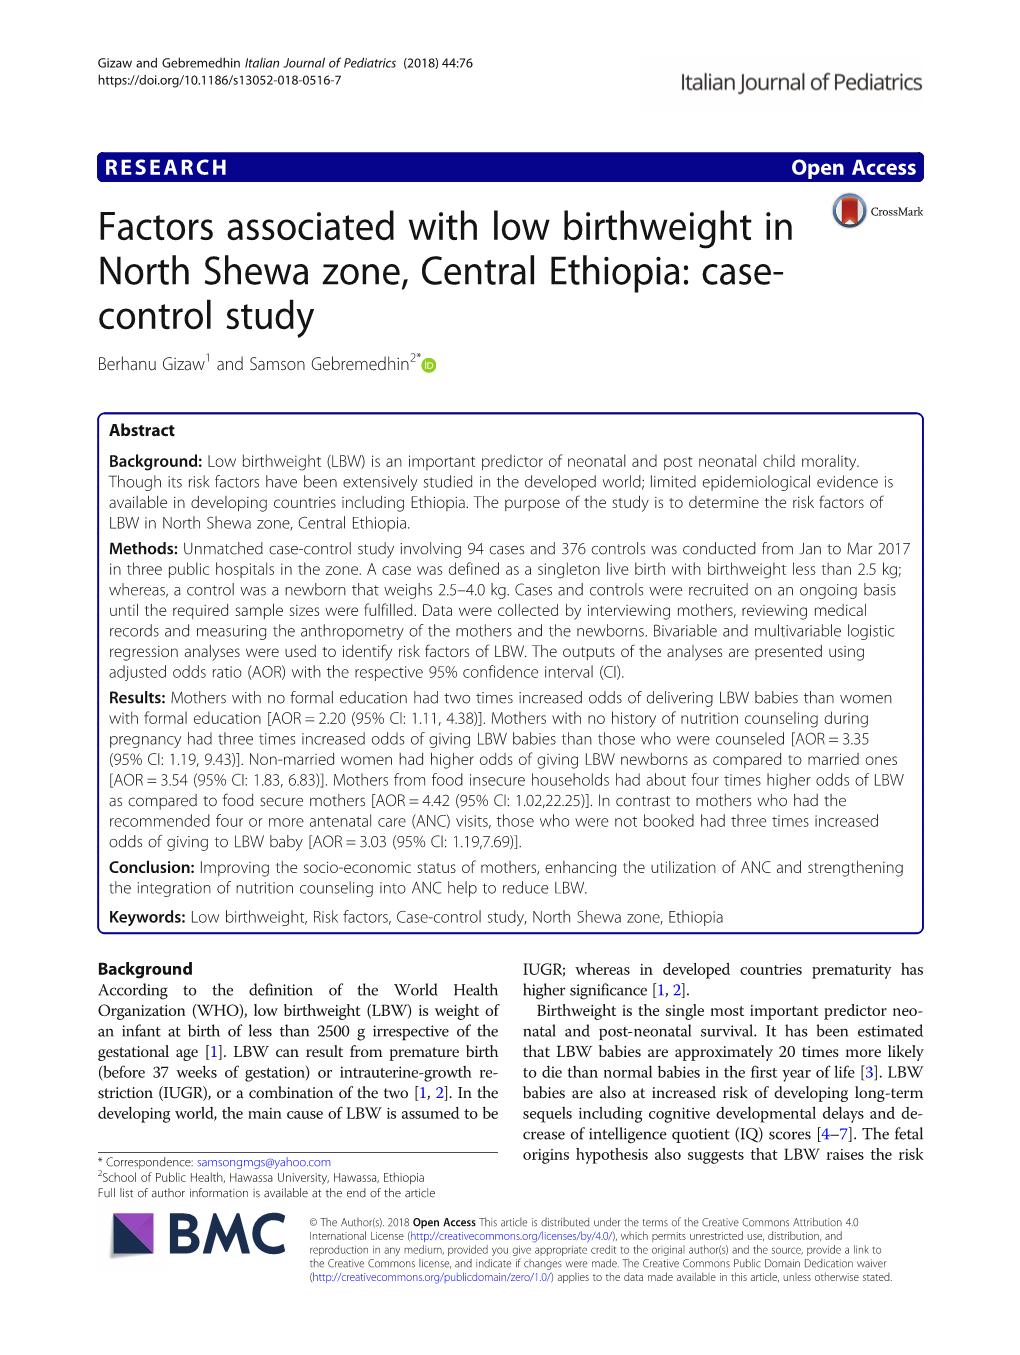 Factors Associated with Low Birthweight in North Shewa Zone, Central Ethiopia: Case- Control Study Berhanu Gizaw1 and Samson Gebremedhin2*